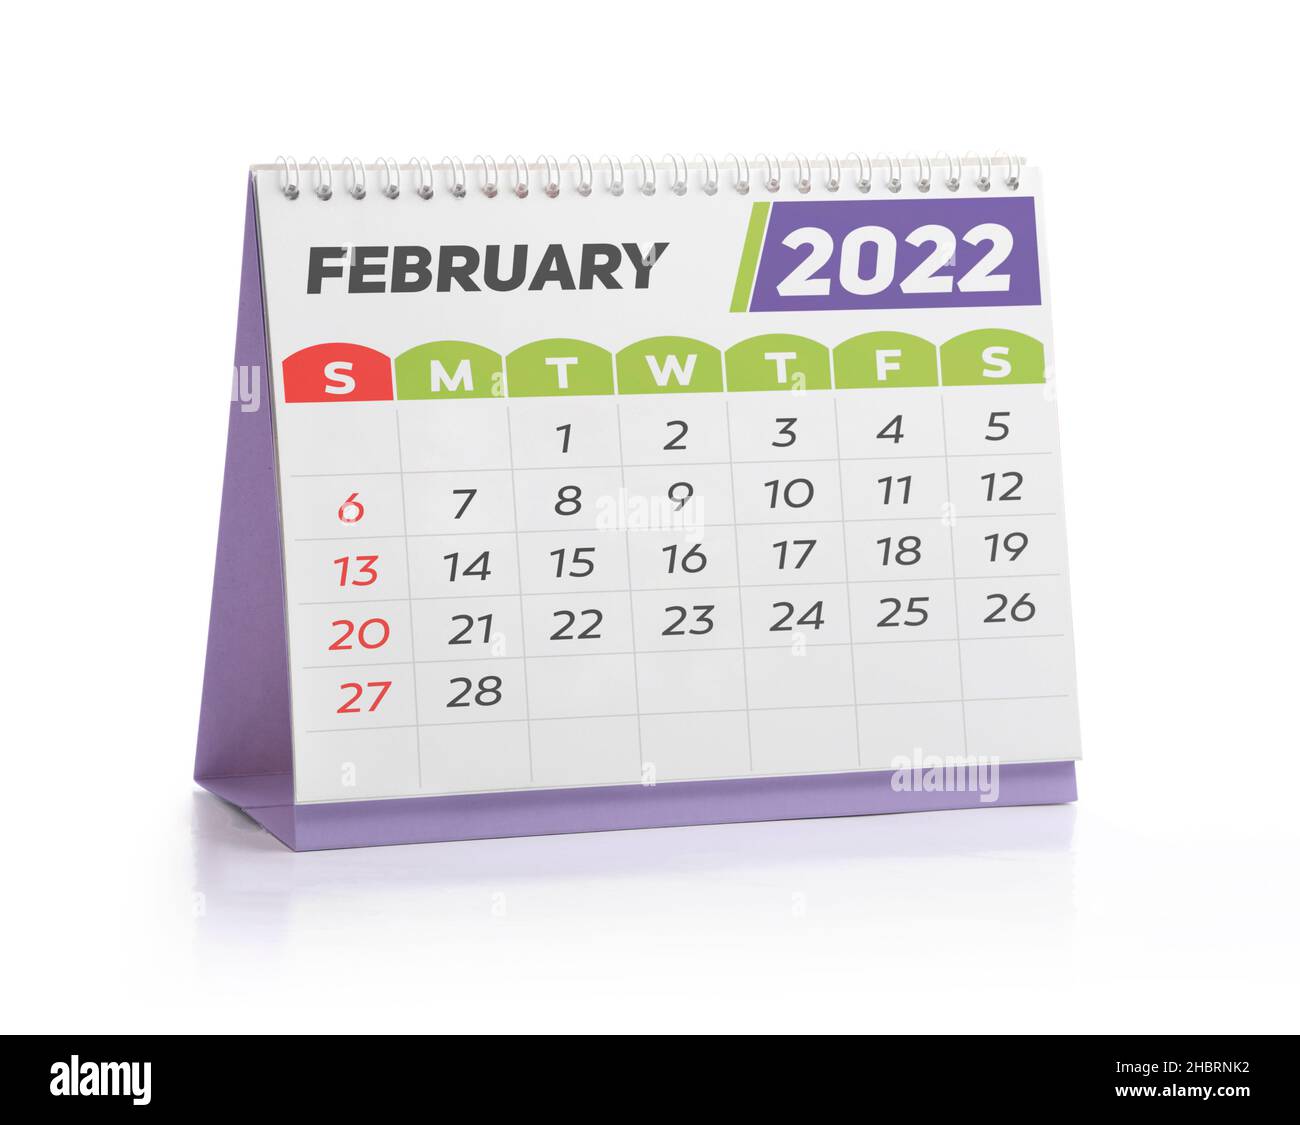 February White Office Calendar 2022 Isolated on White Stock Photo